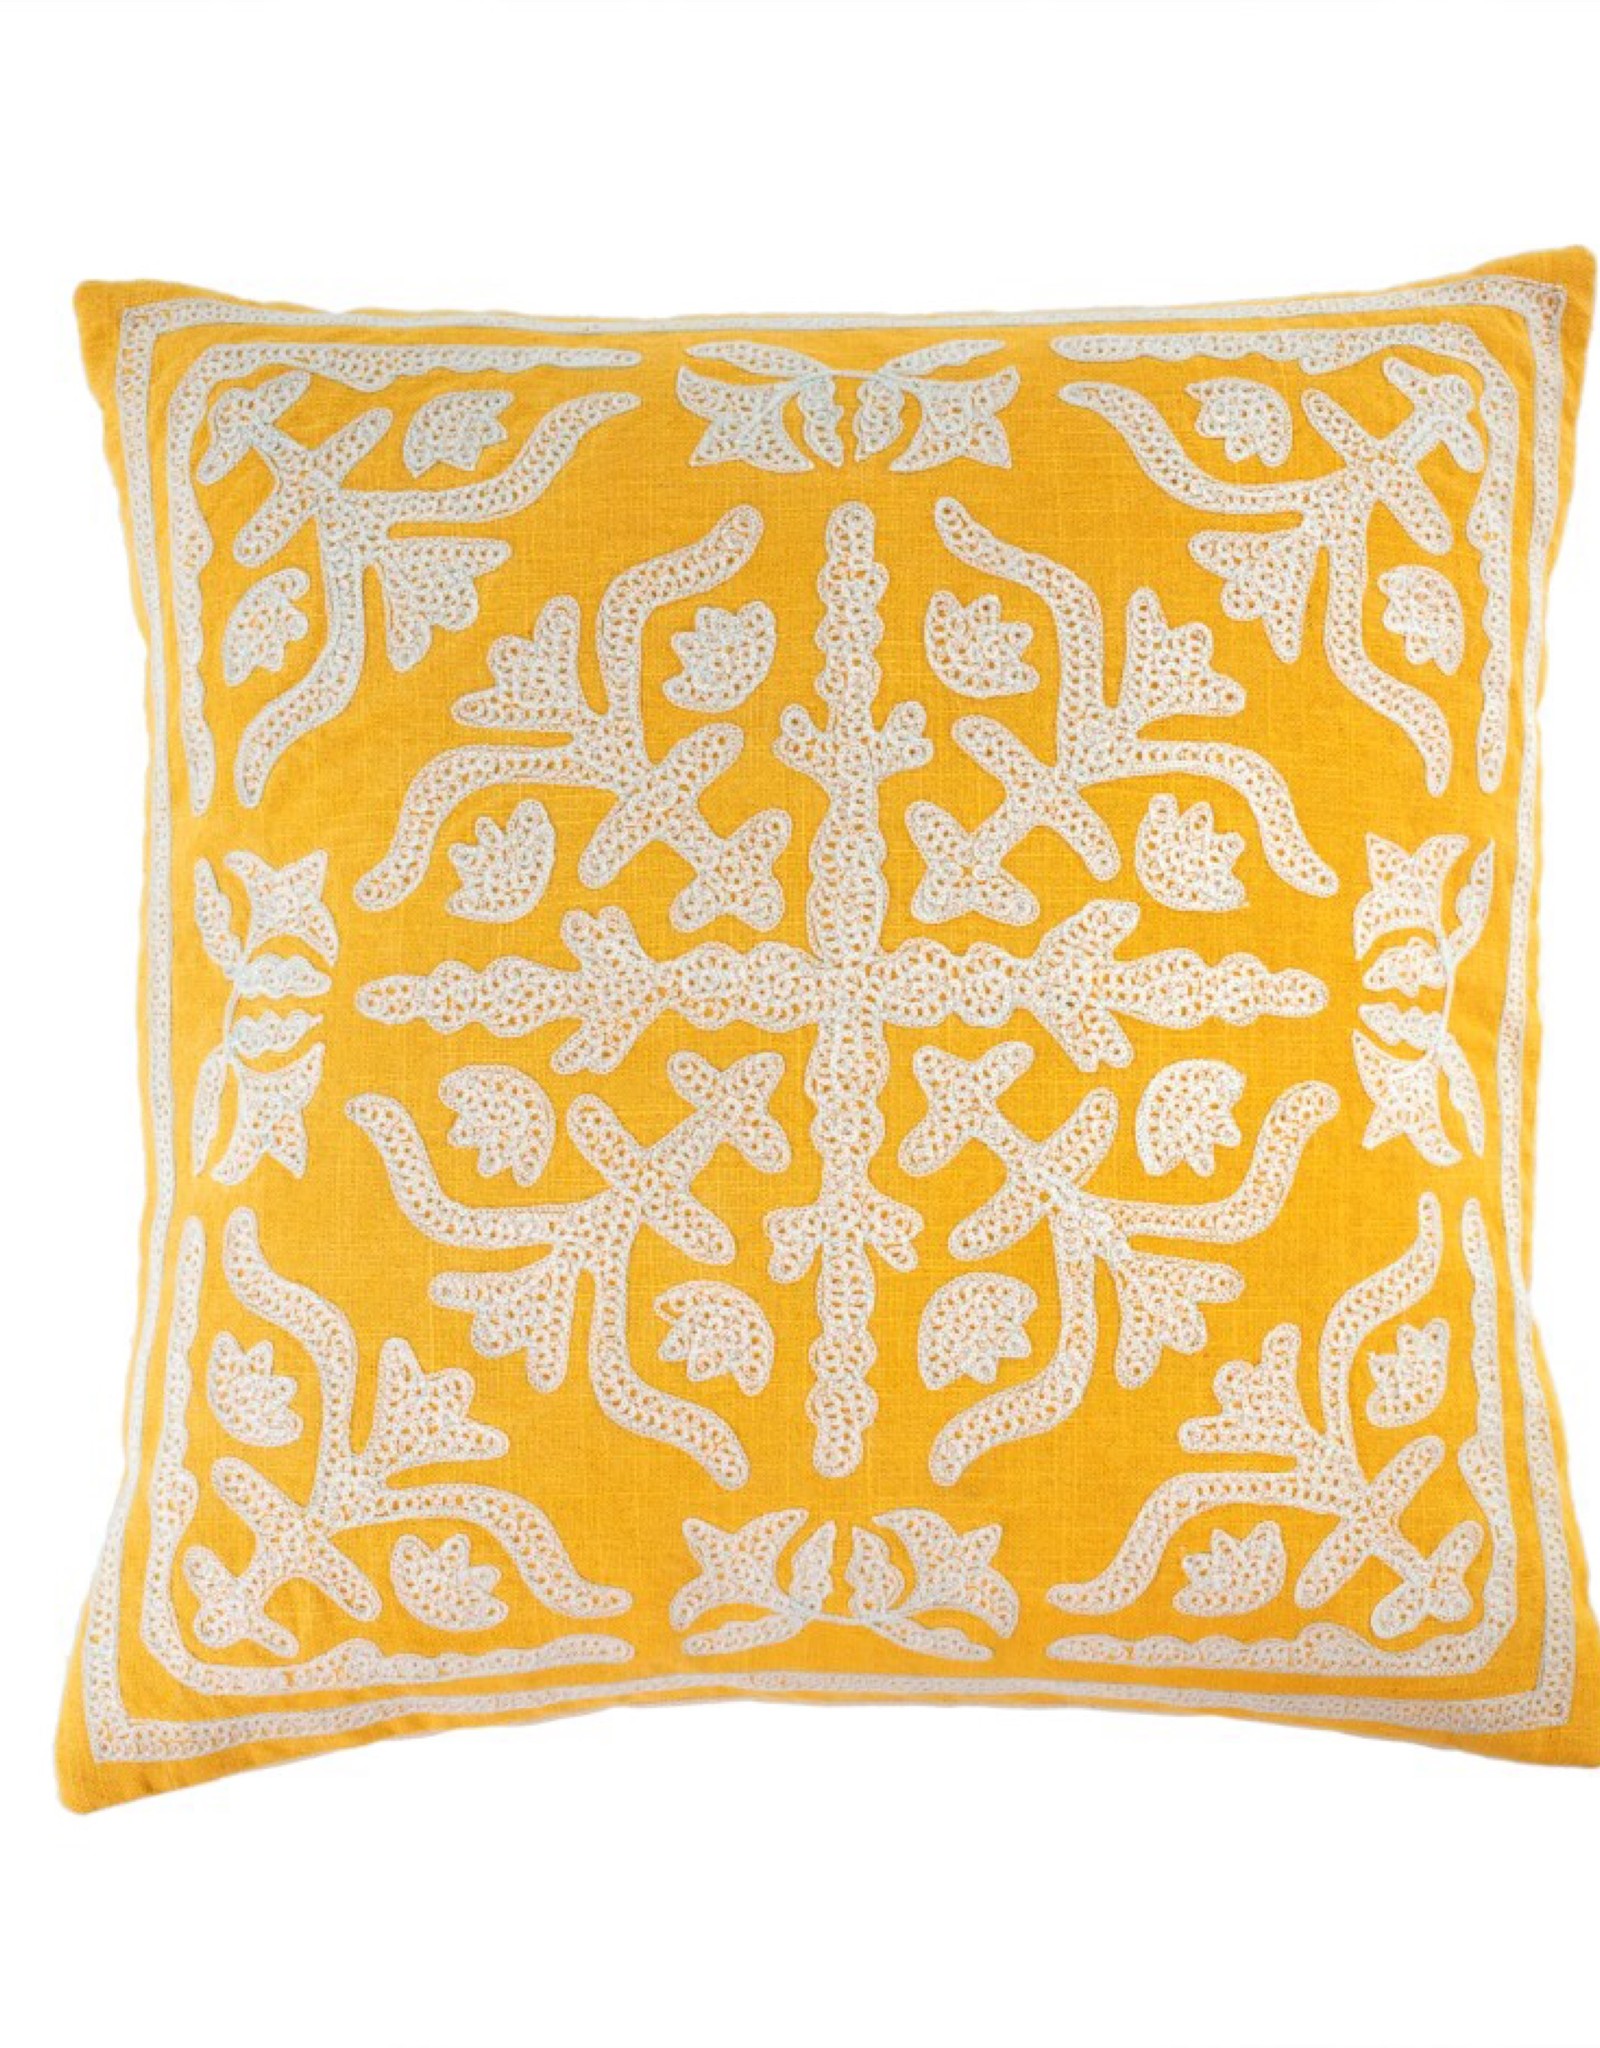 Indaba Cushions Indaba Cyprus Dandelion 20 x 20 1-4285-C